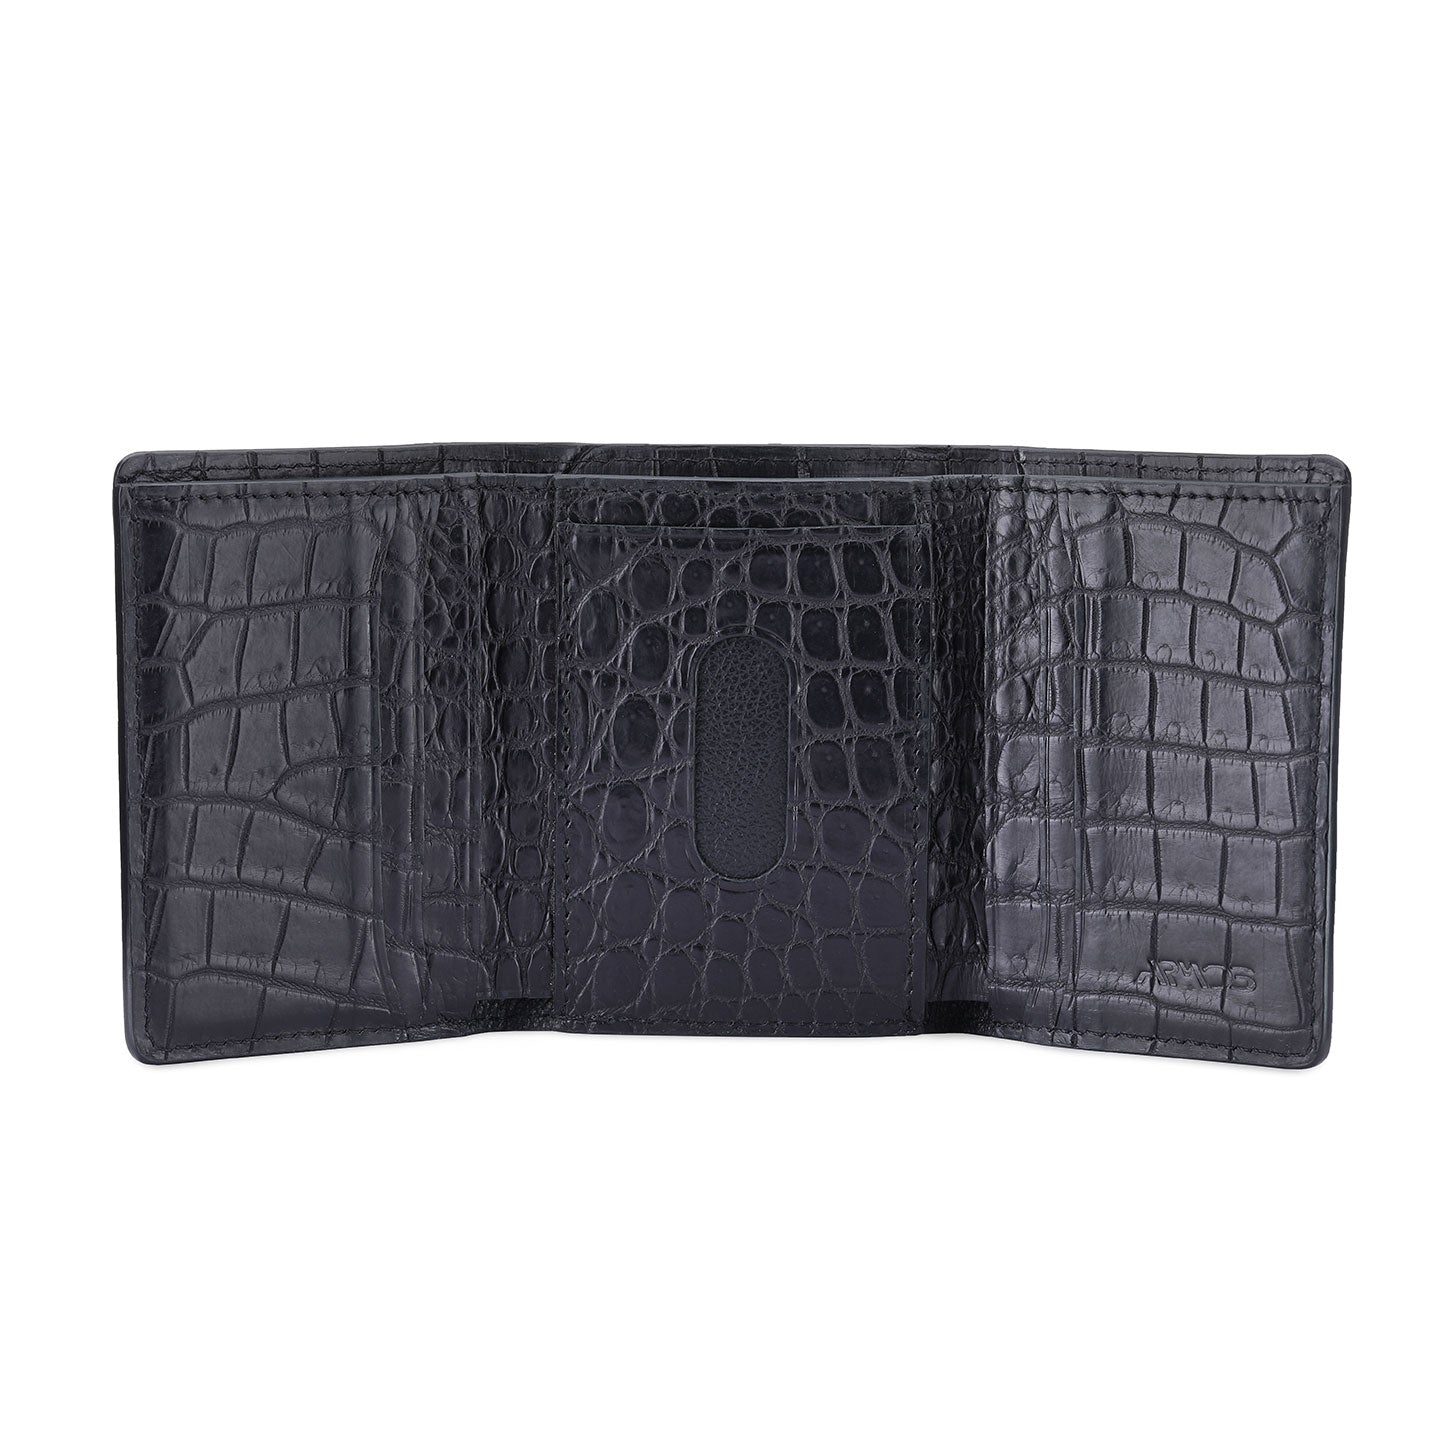 Black crocodile leather wallet